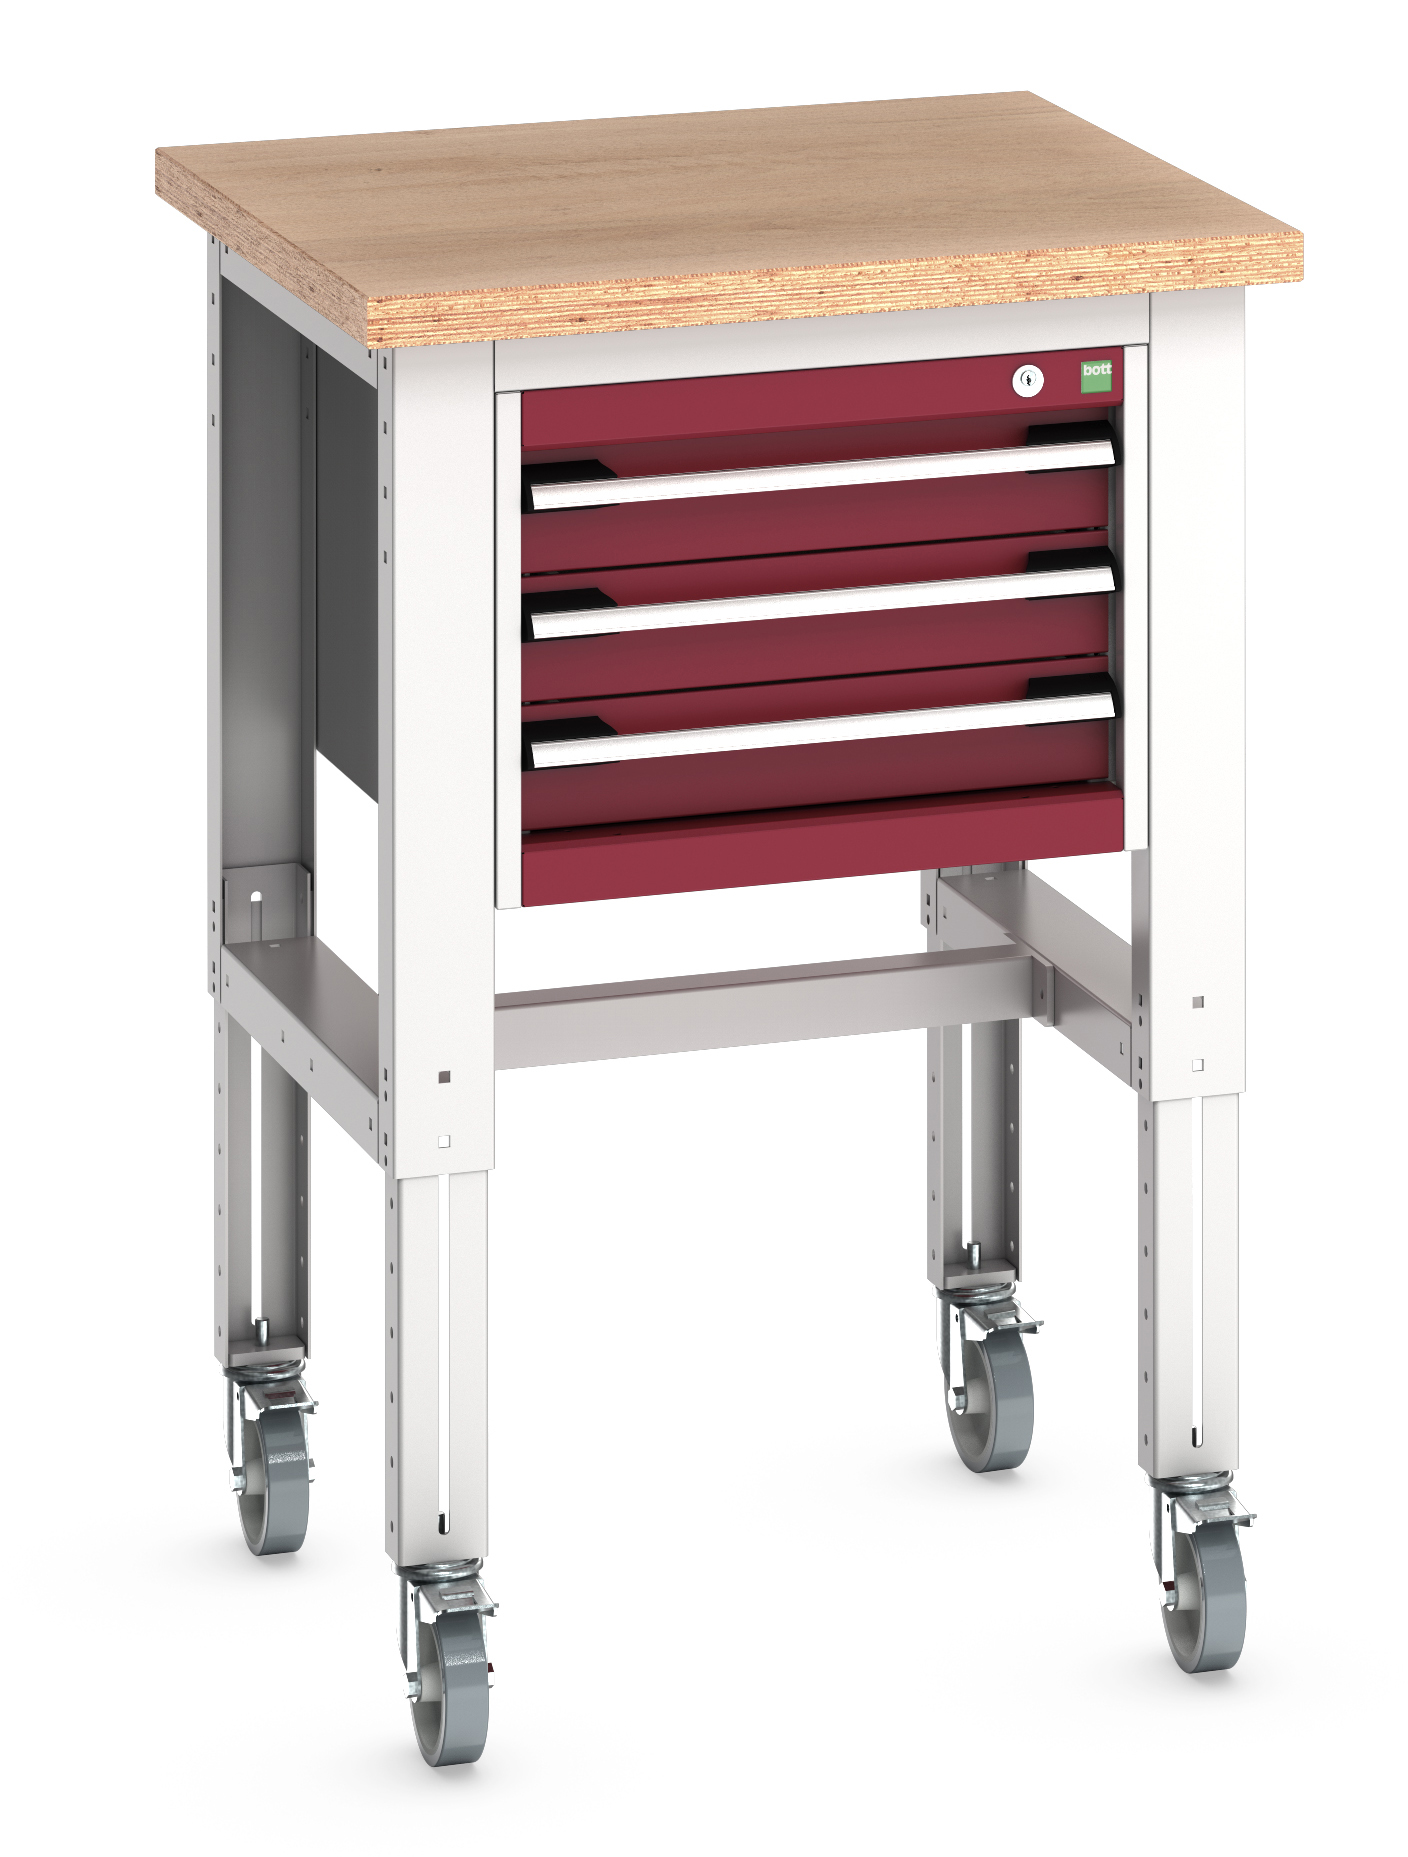 Bott Cubio Adjustable Height Mobile Workstand With 3 Drawer Cabinet - 41003527.24V